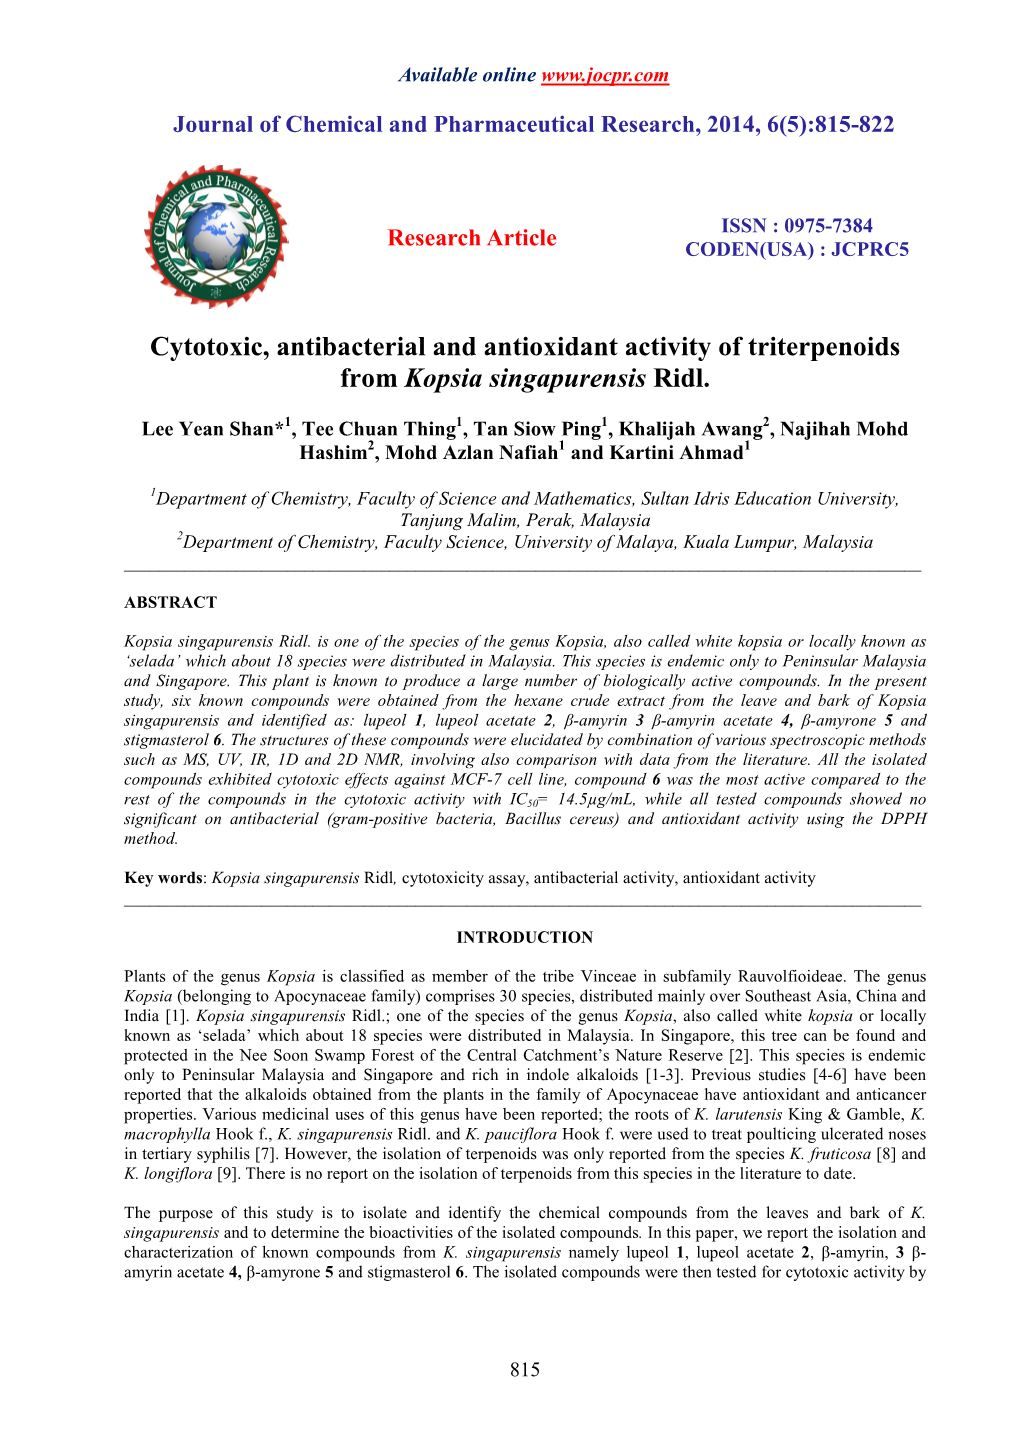 Cytotoxic, Antibacterial and Antioxidant Activity of Triterpenoids from Kopsia Singapurensis Ridl